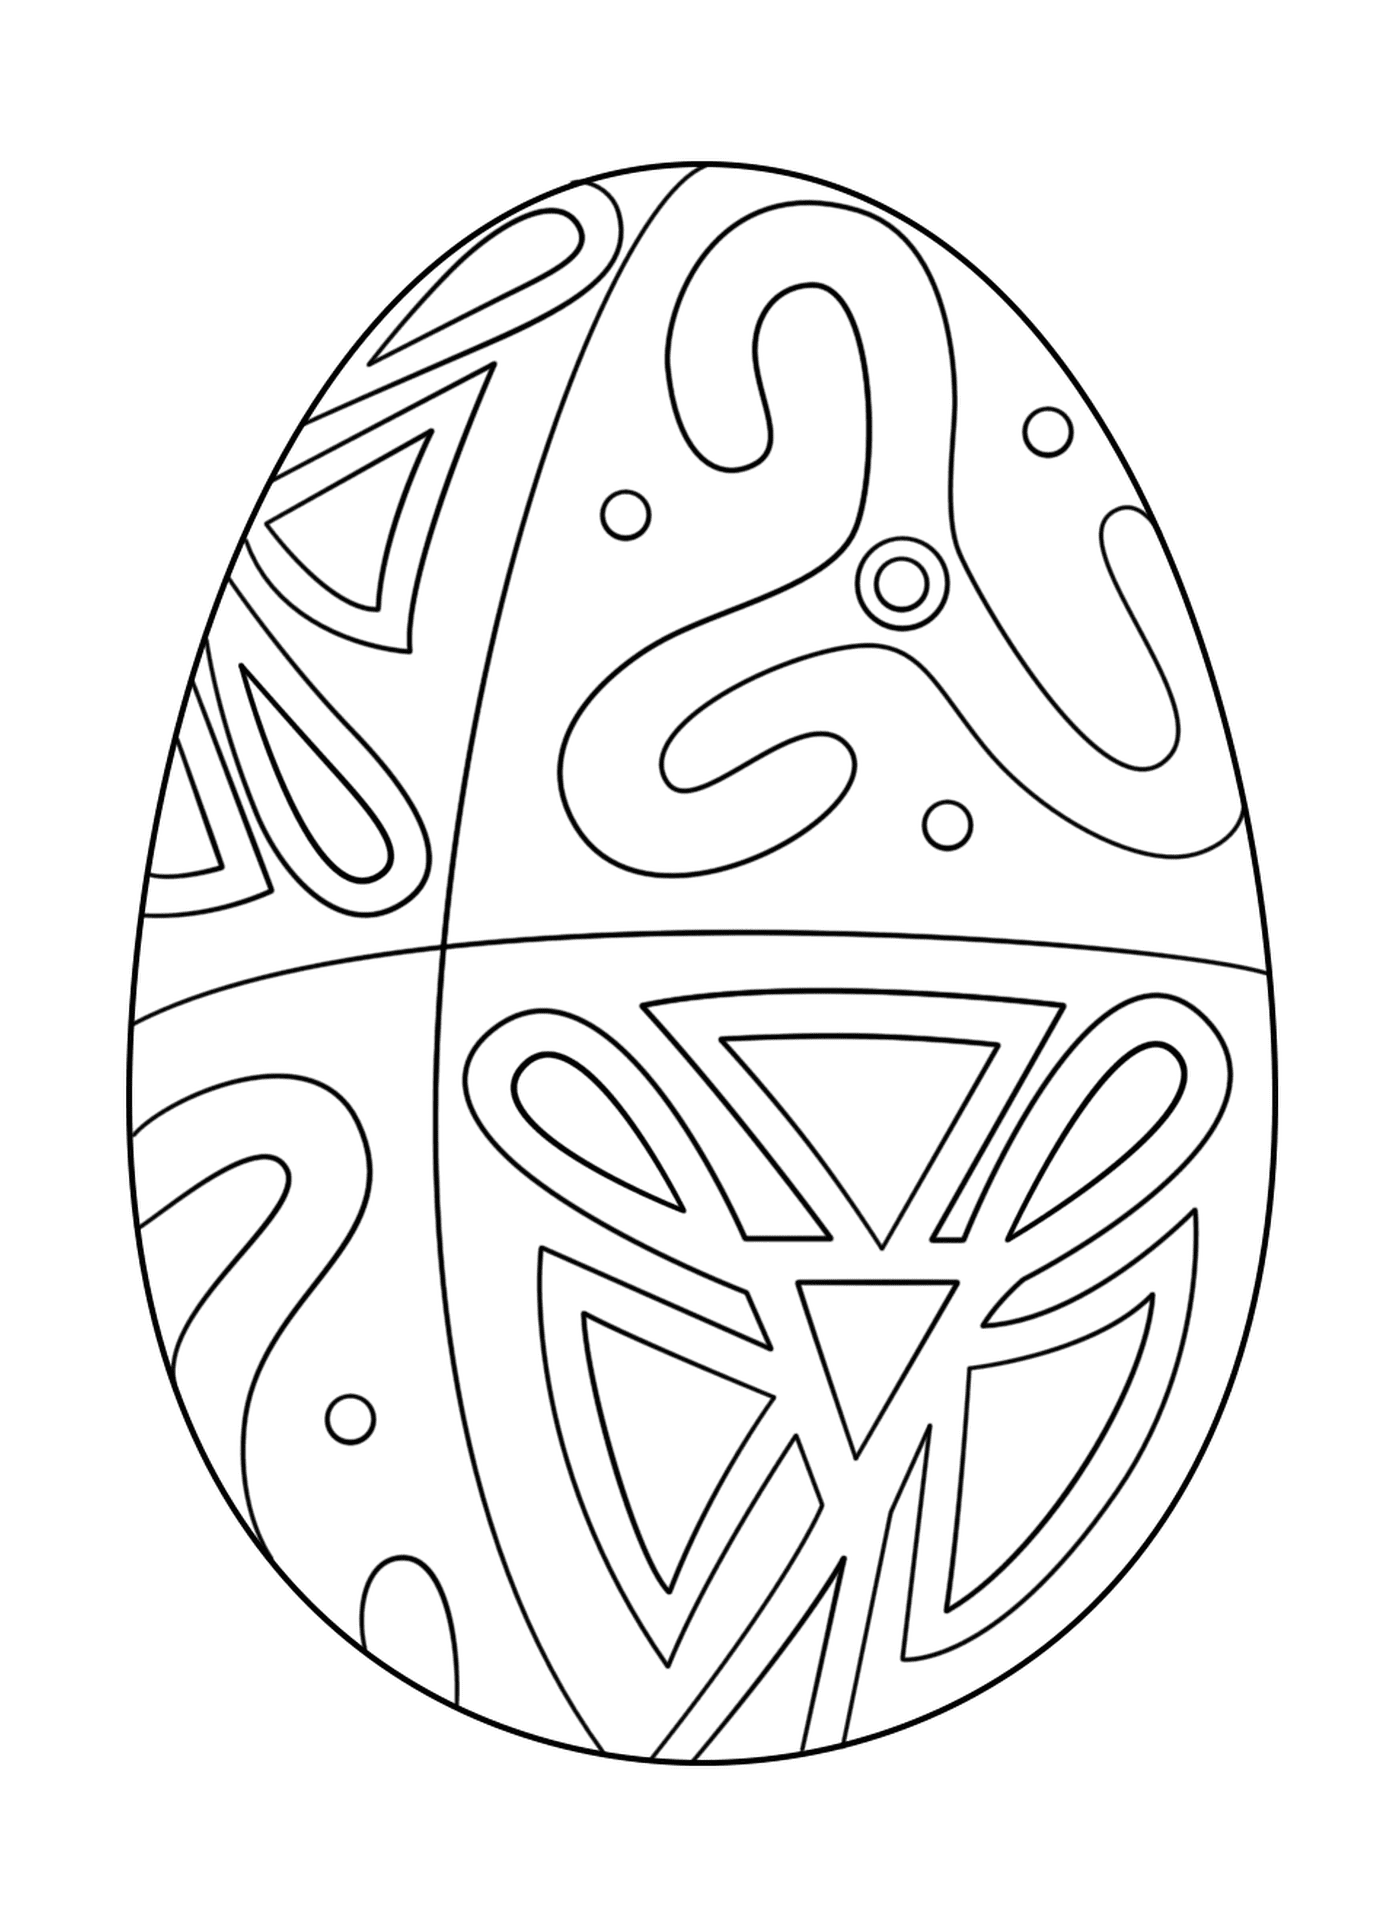  Huevo de Pascua con motivo folklórico 